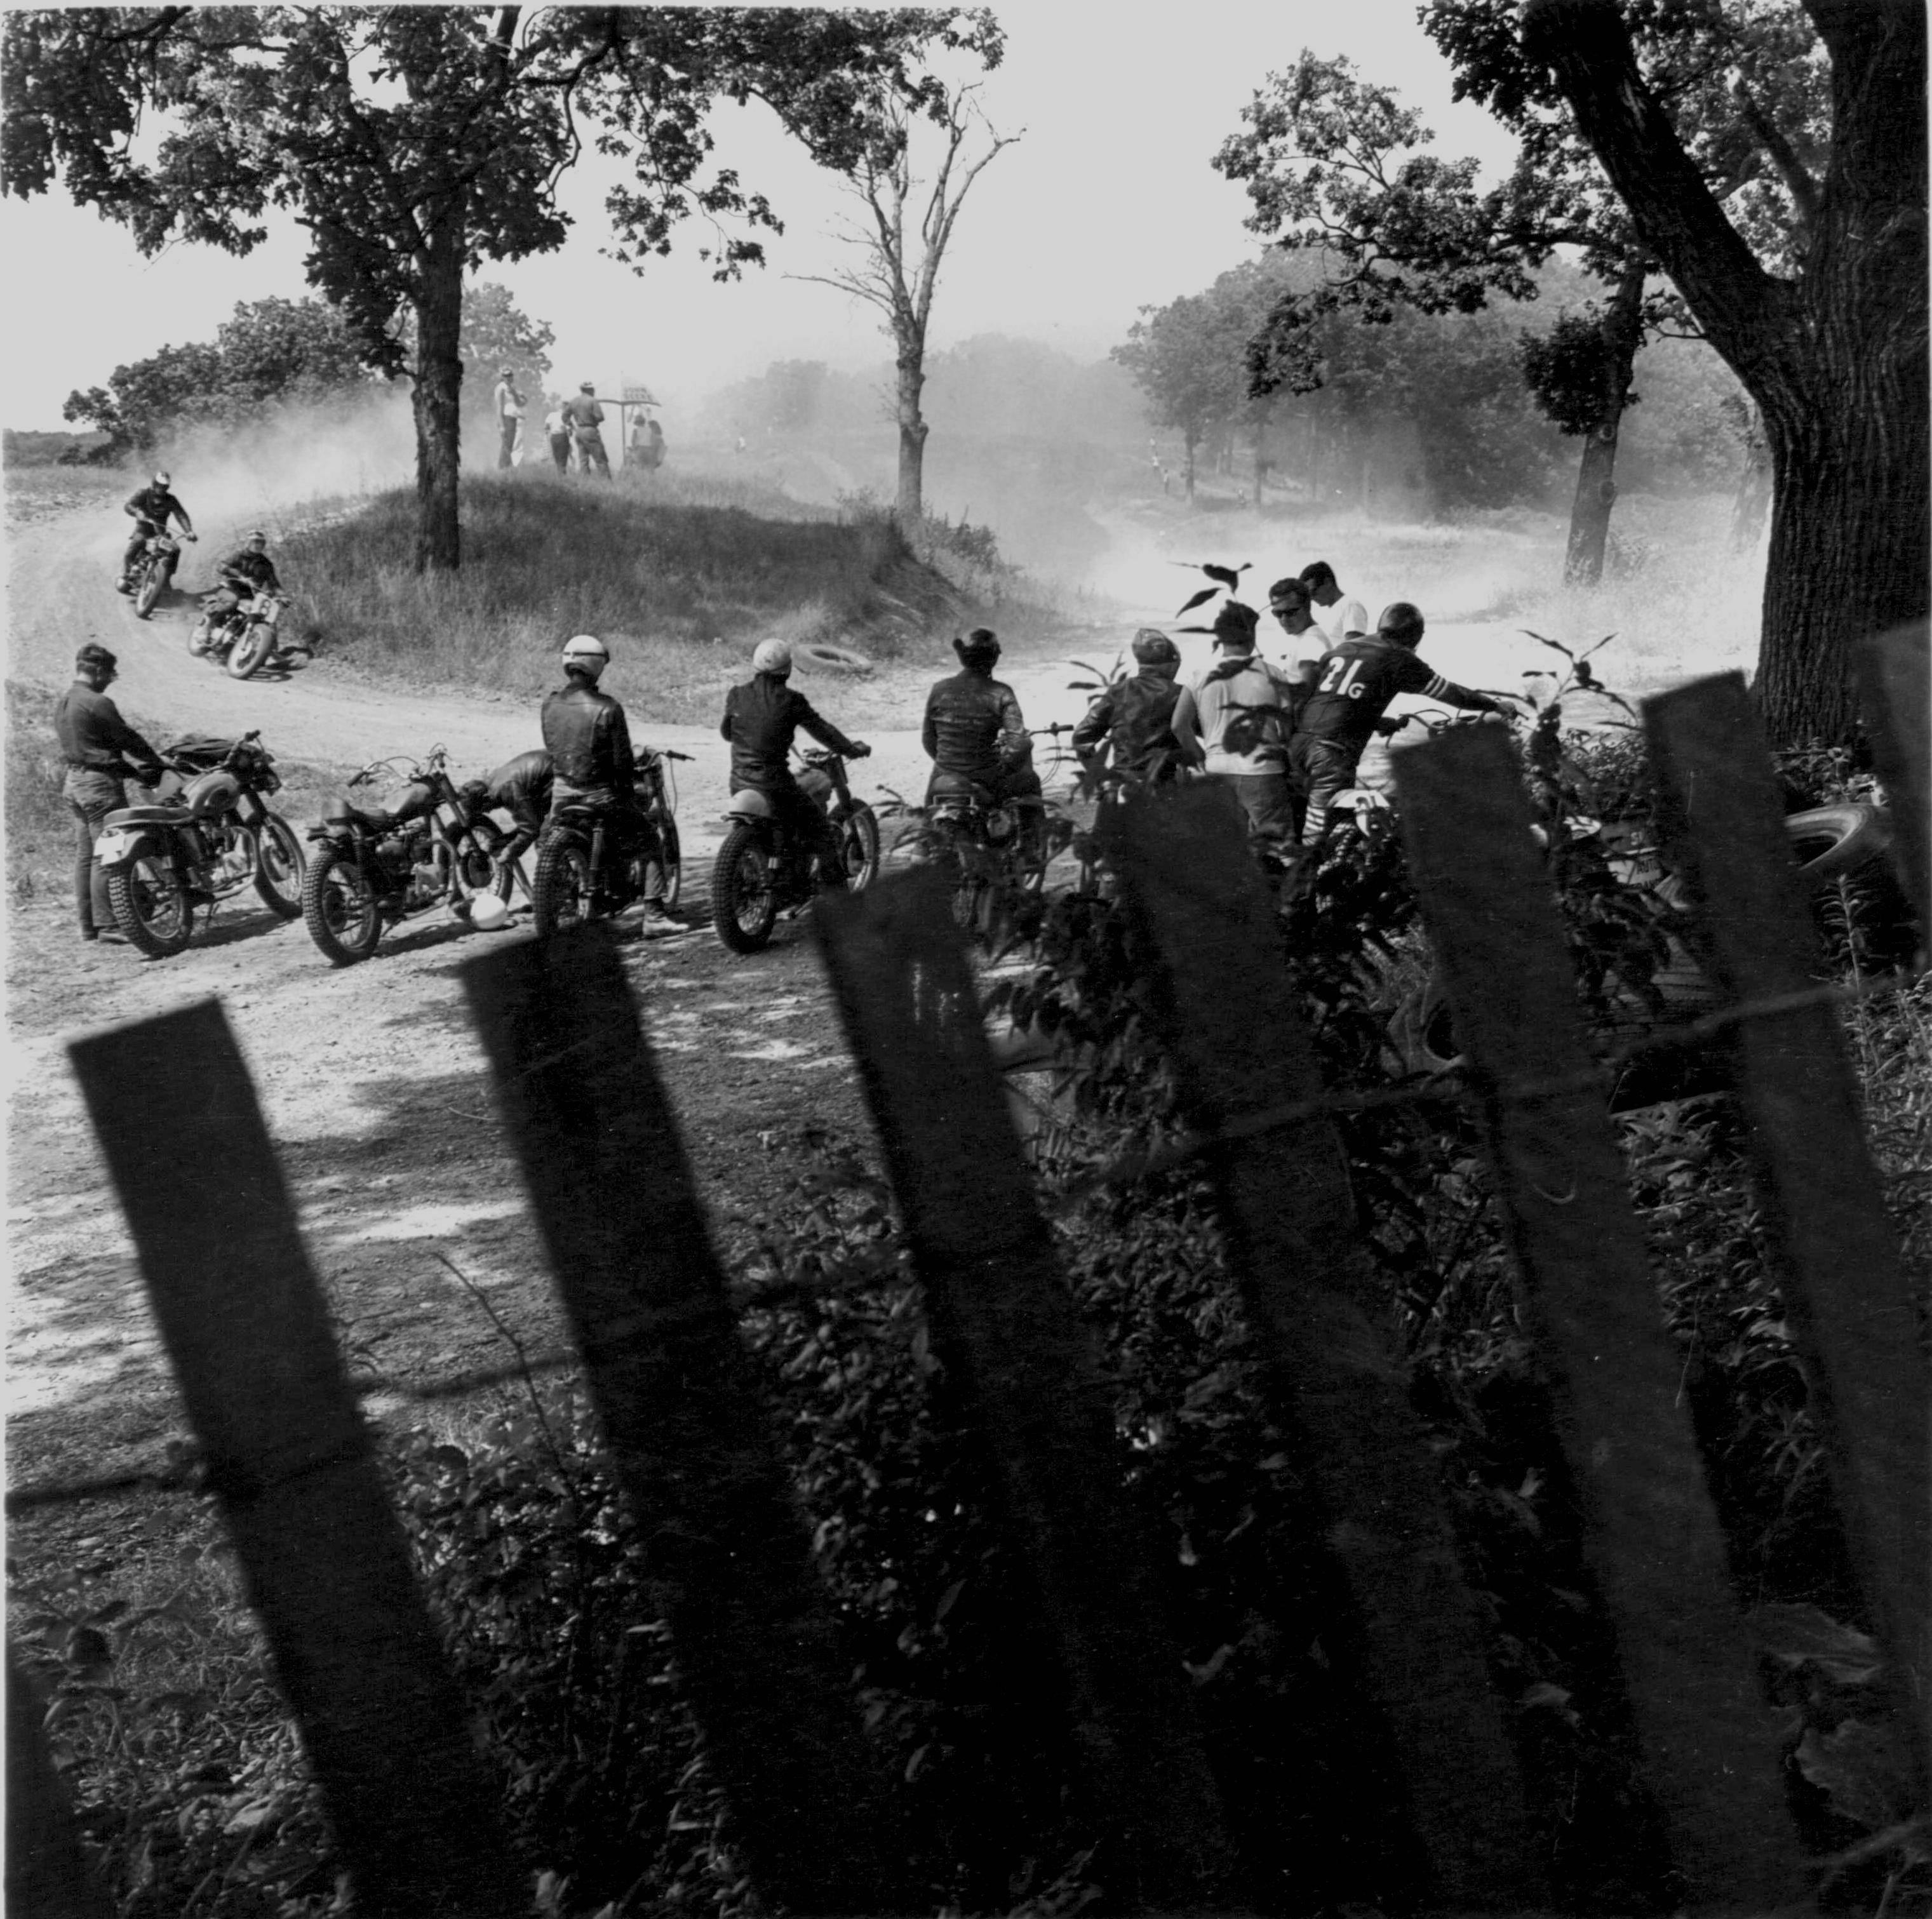 Danny Lyon Black and White Photograph - Scrambles Track, McHenry, Ilinois